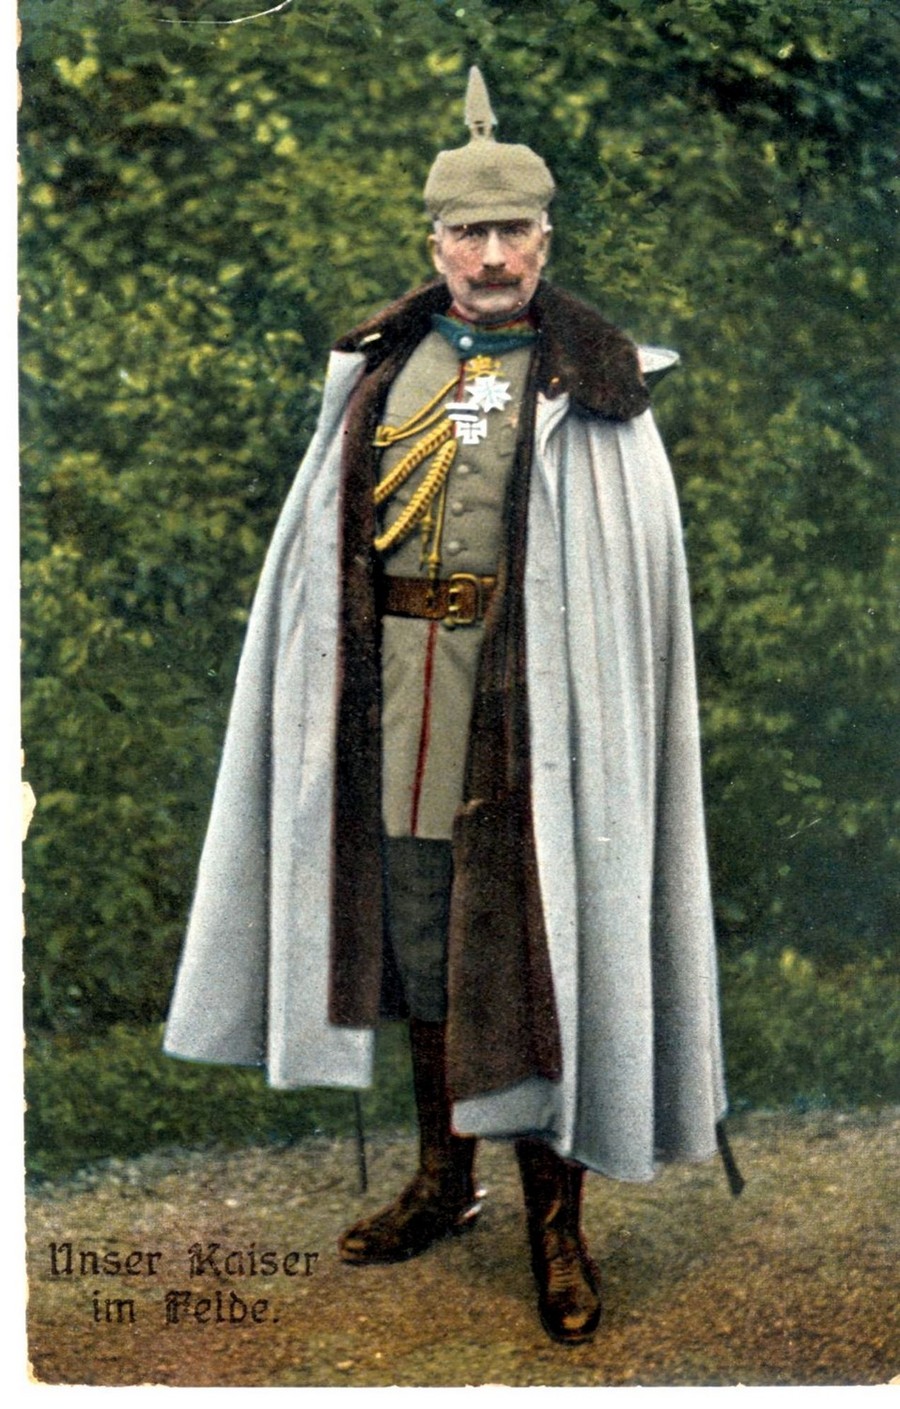 German emporer Wilhelm II | A Military Photos & Video Website